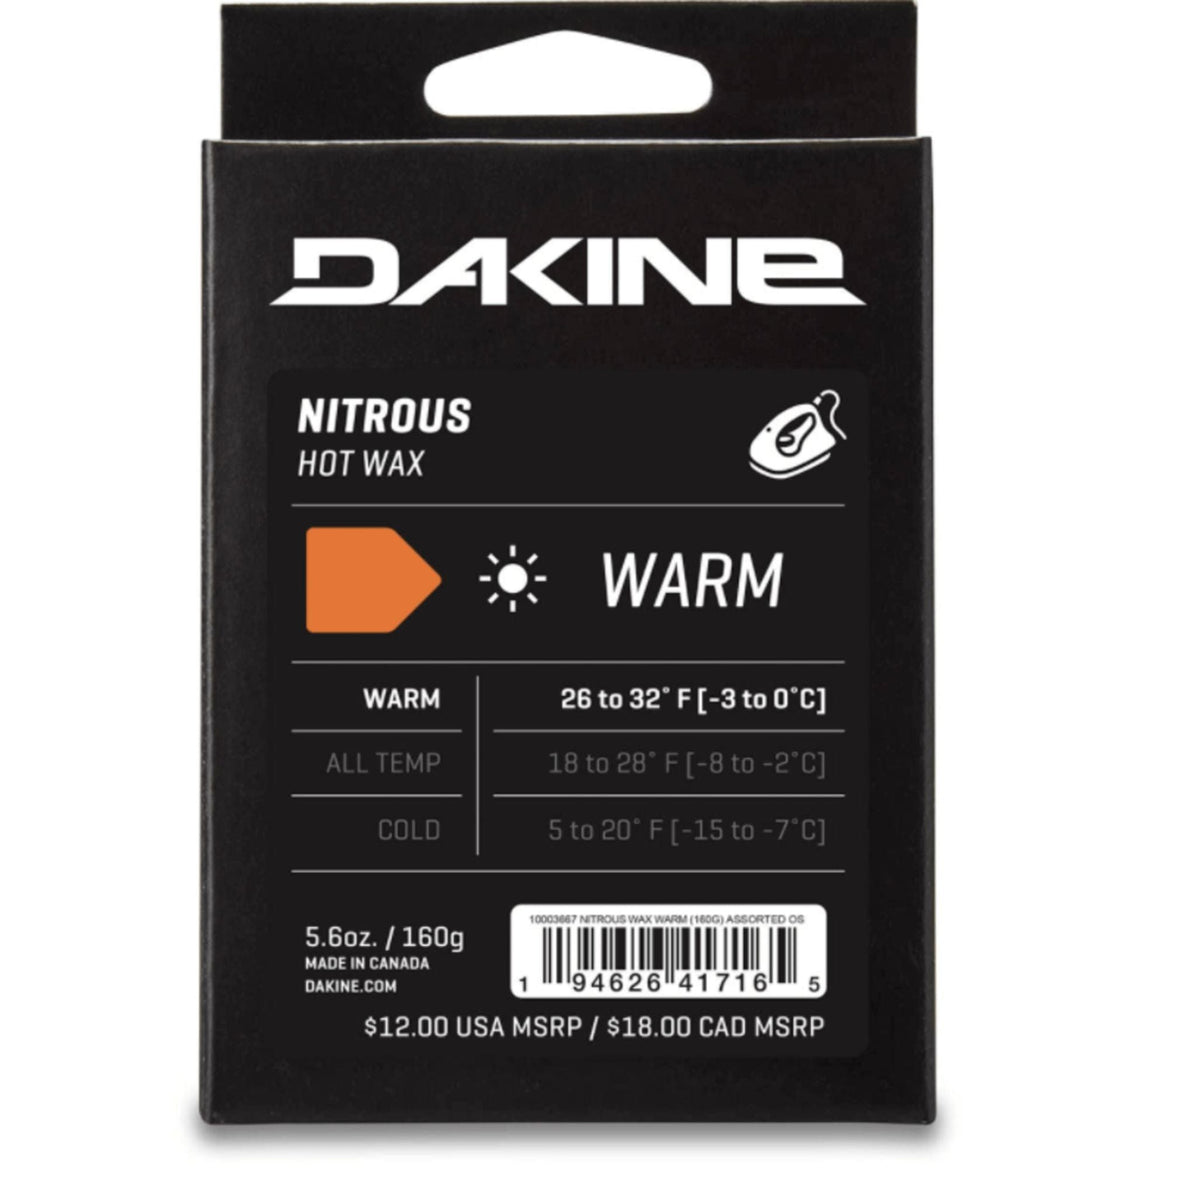 Dakine Nitrous Warm Wax 160g